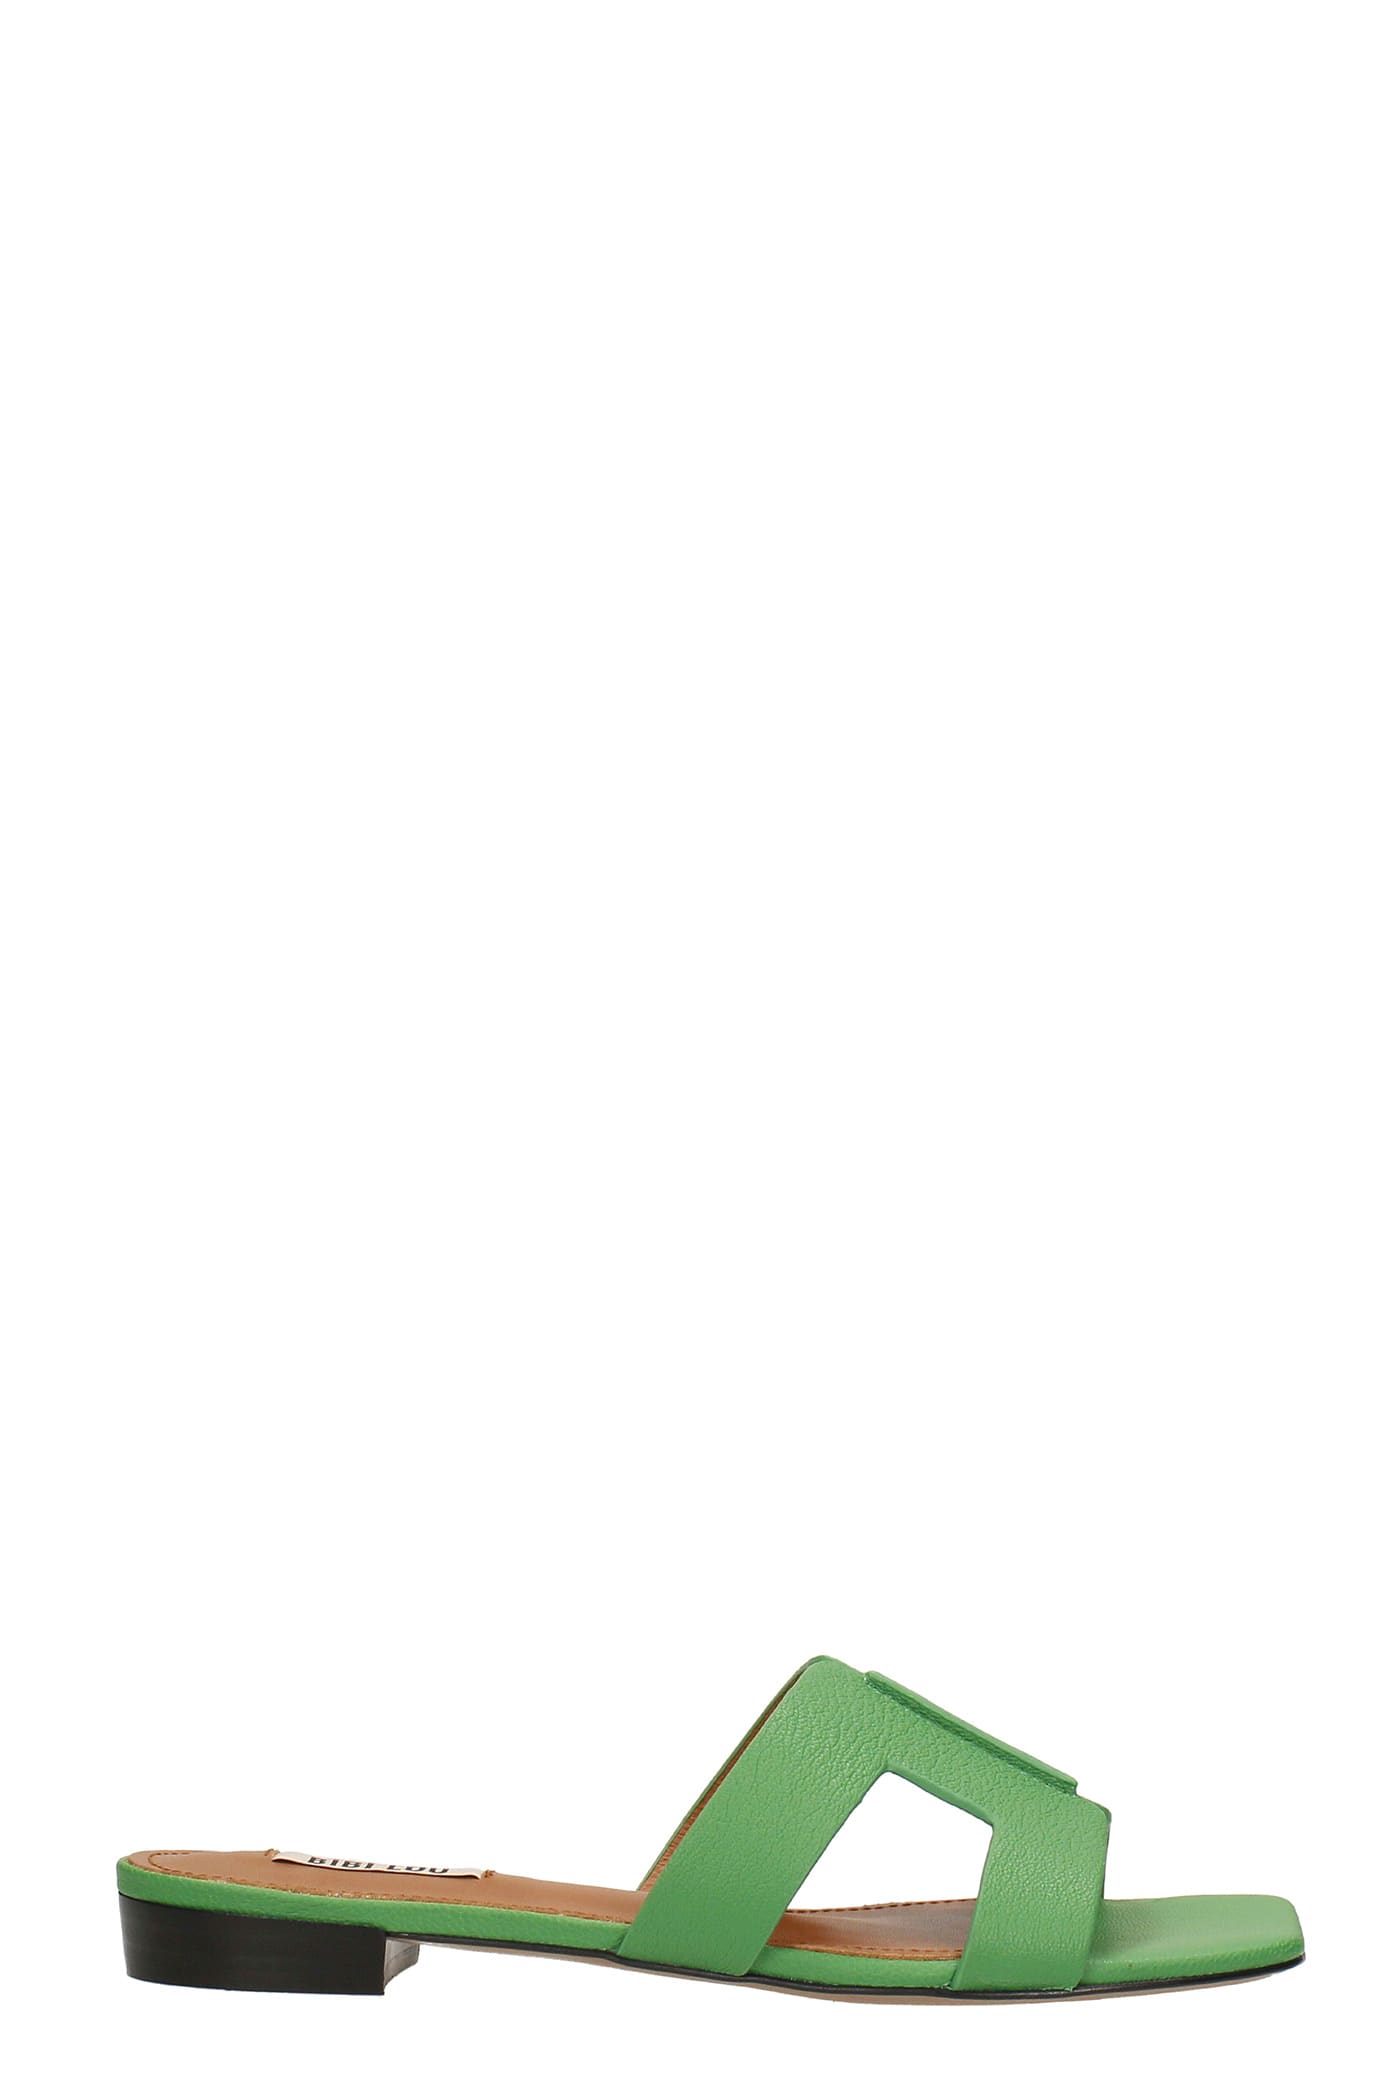 Bibi Lou Chieko Flats In Green Leather | ModeSens